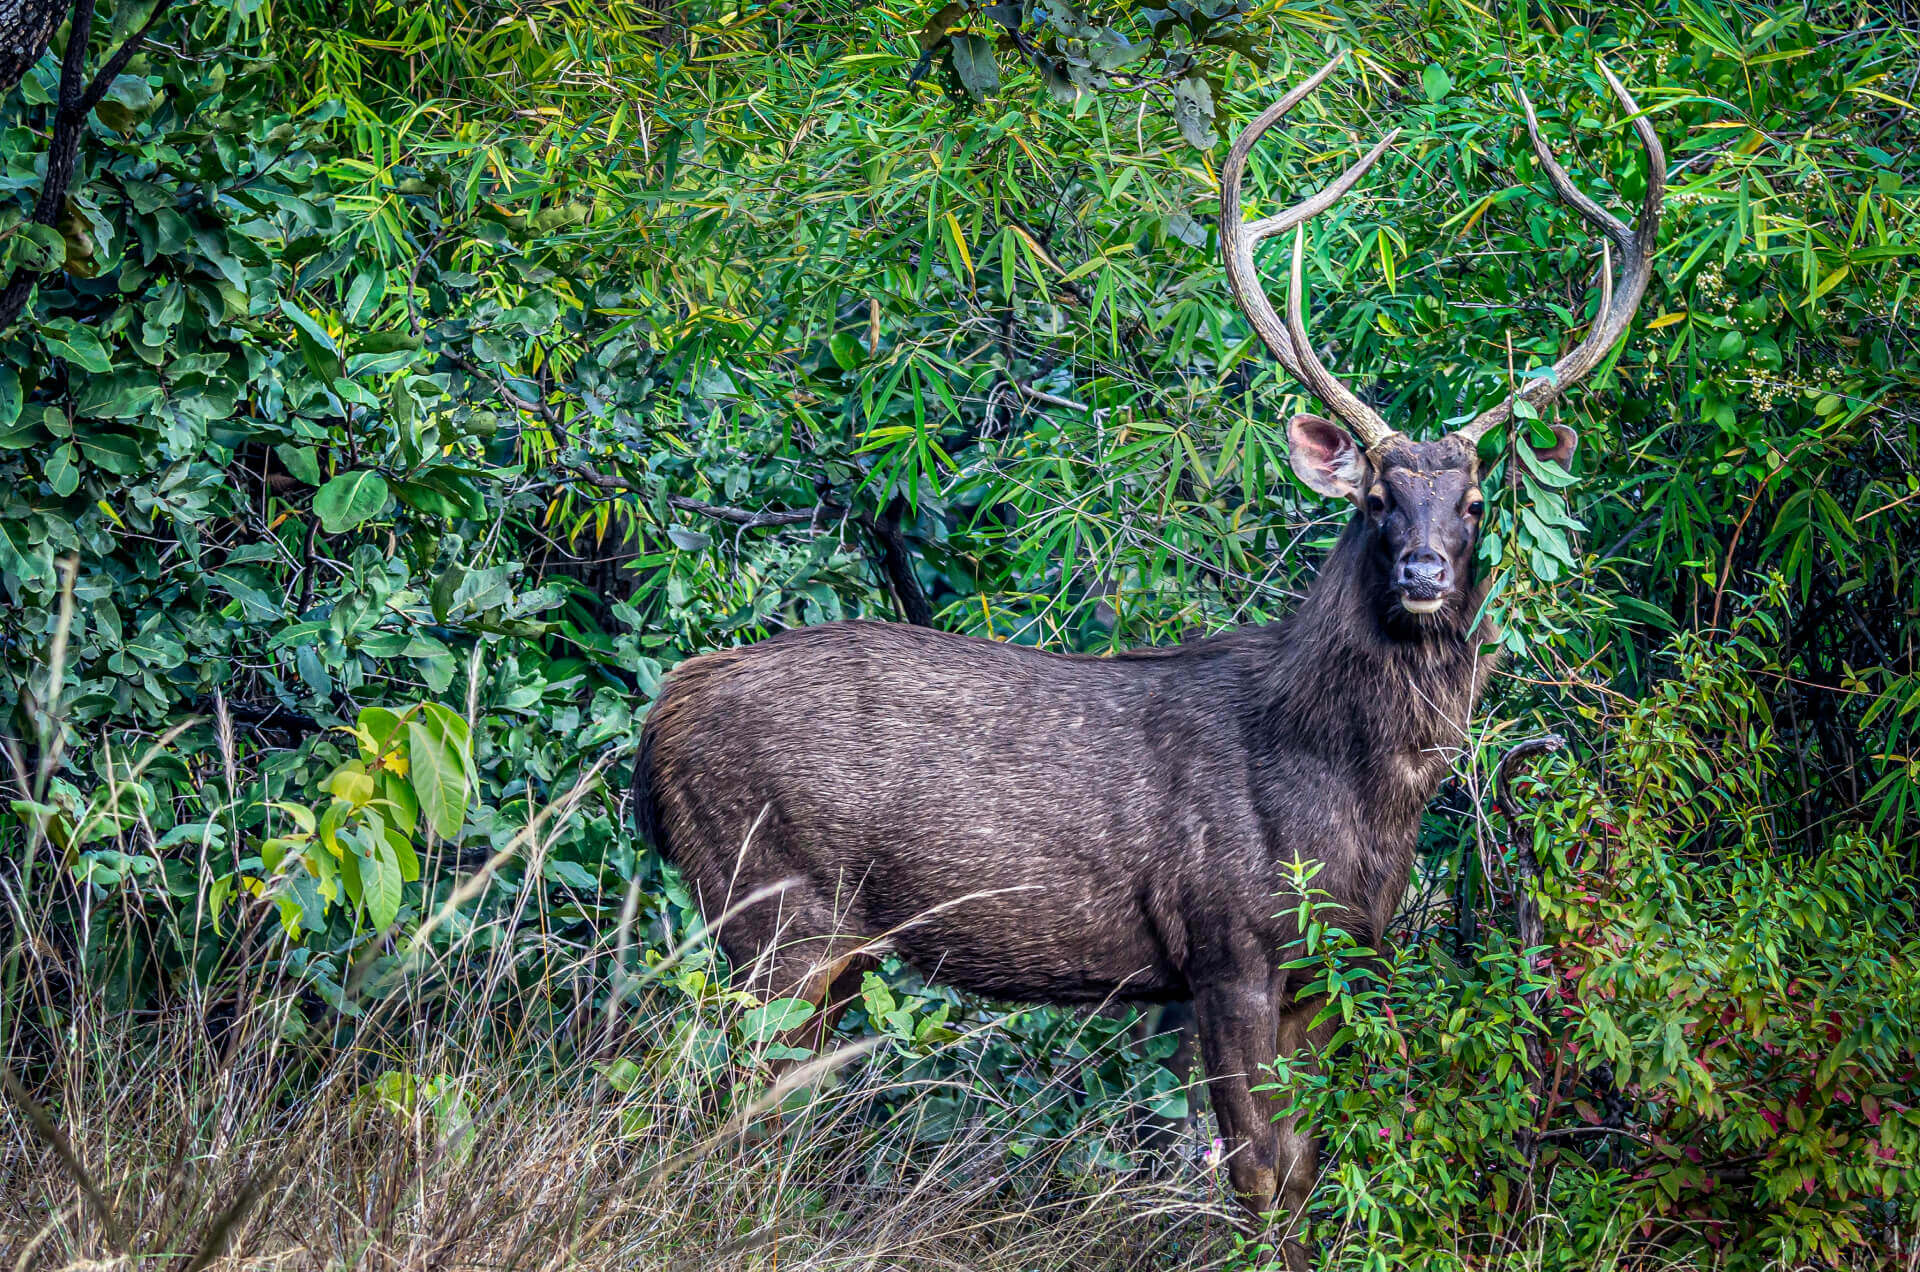 Wildlife Animals in Bandhavgarh